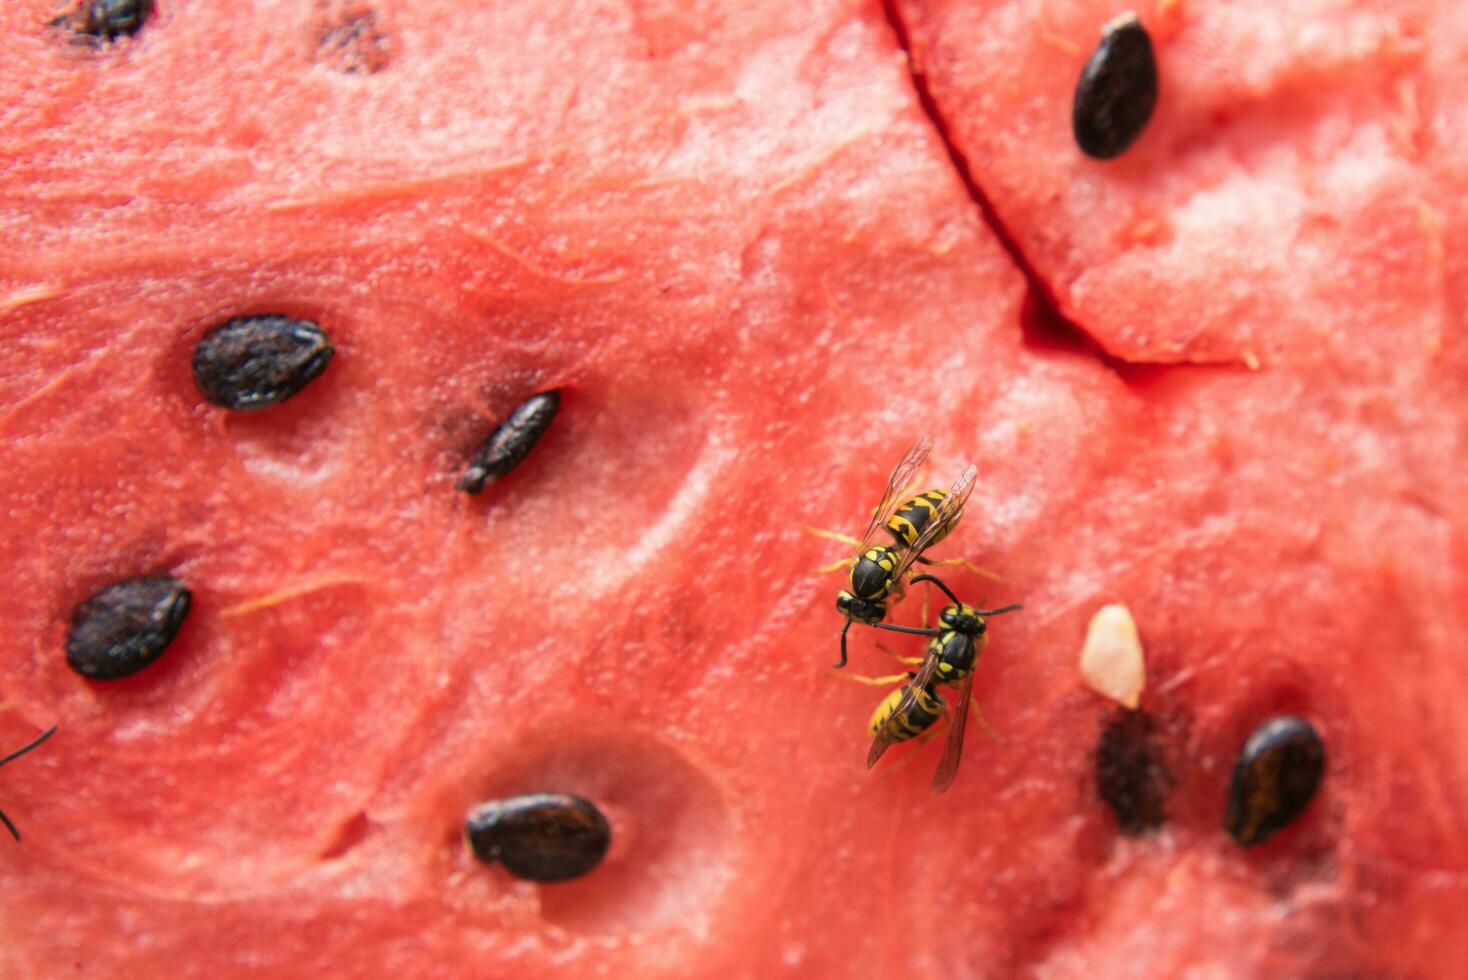 wasp eat juicy red fresh chopped watermelon photo